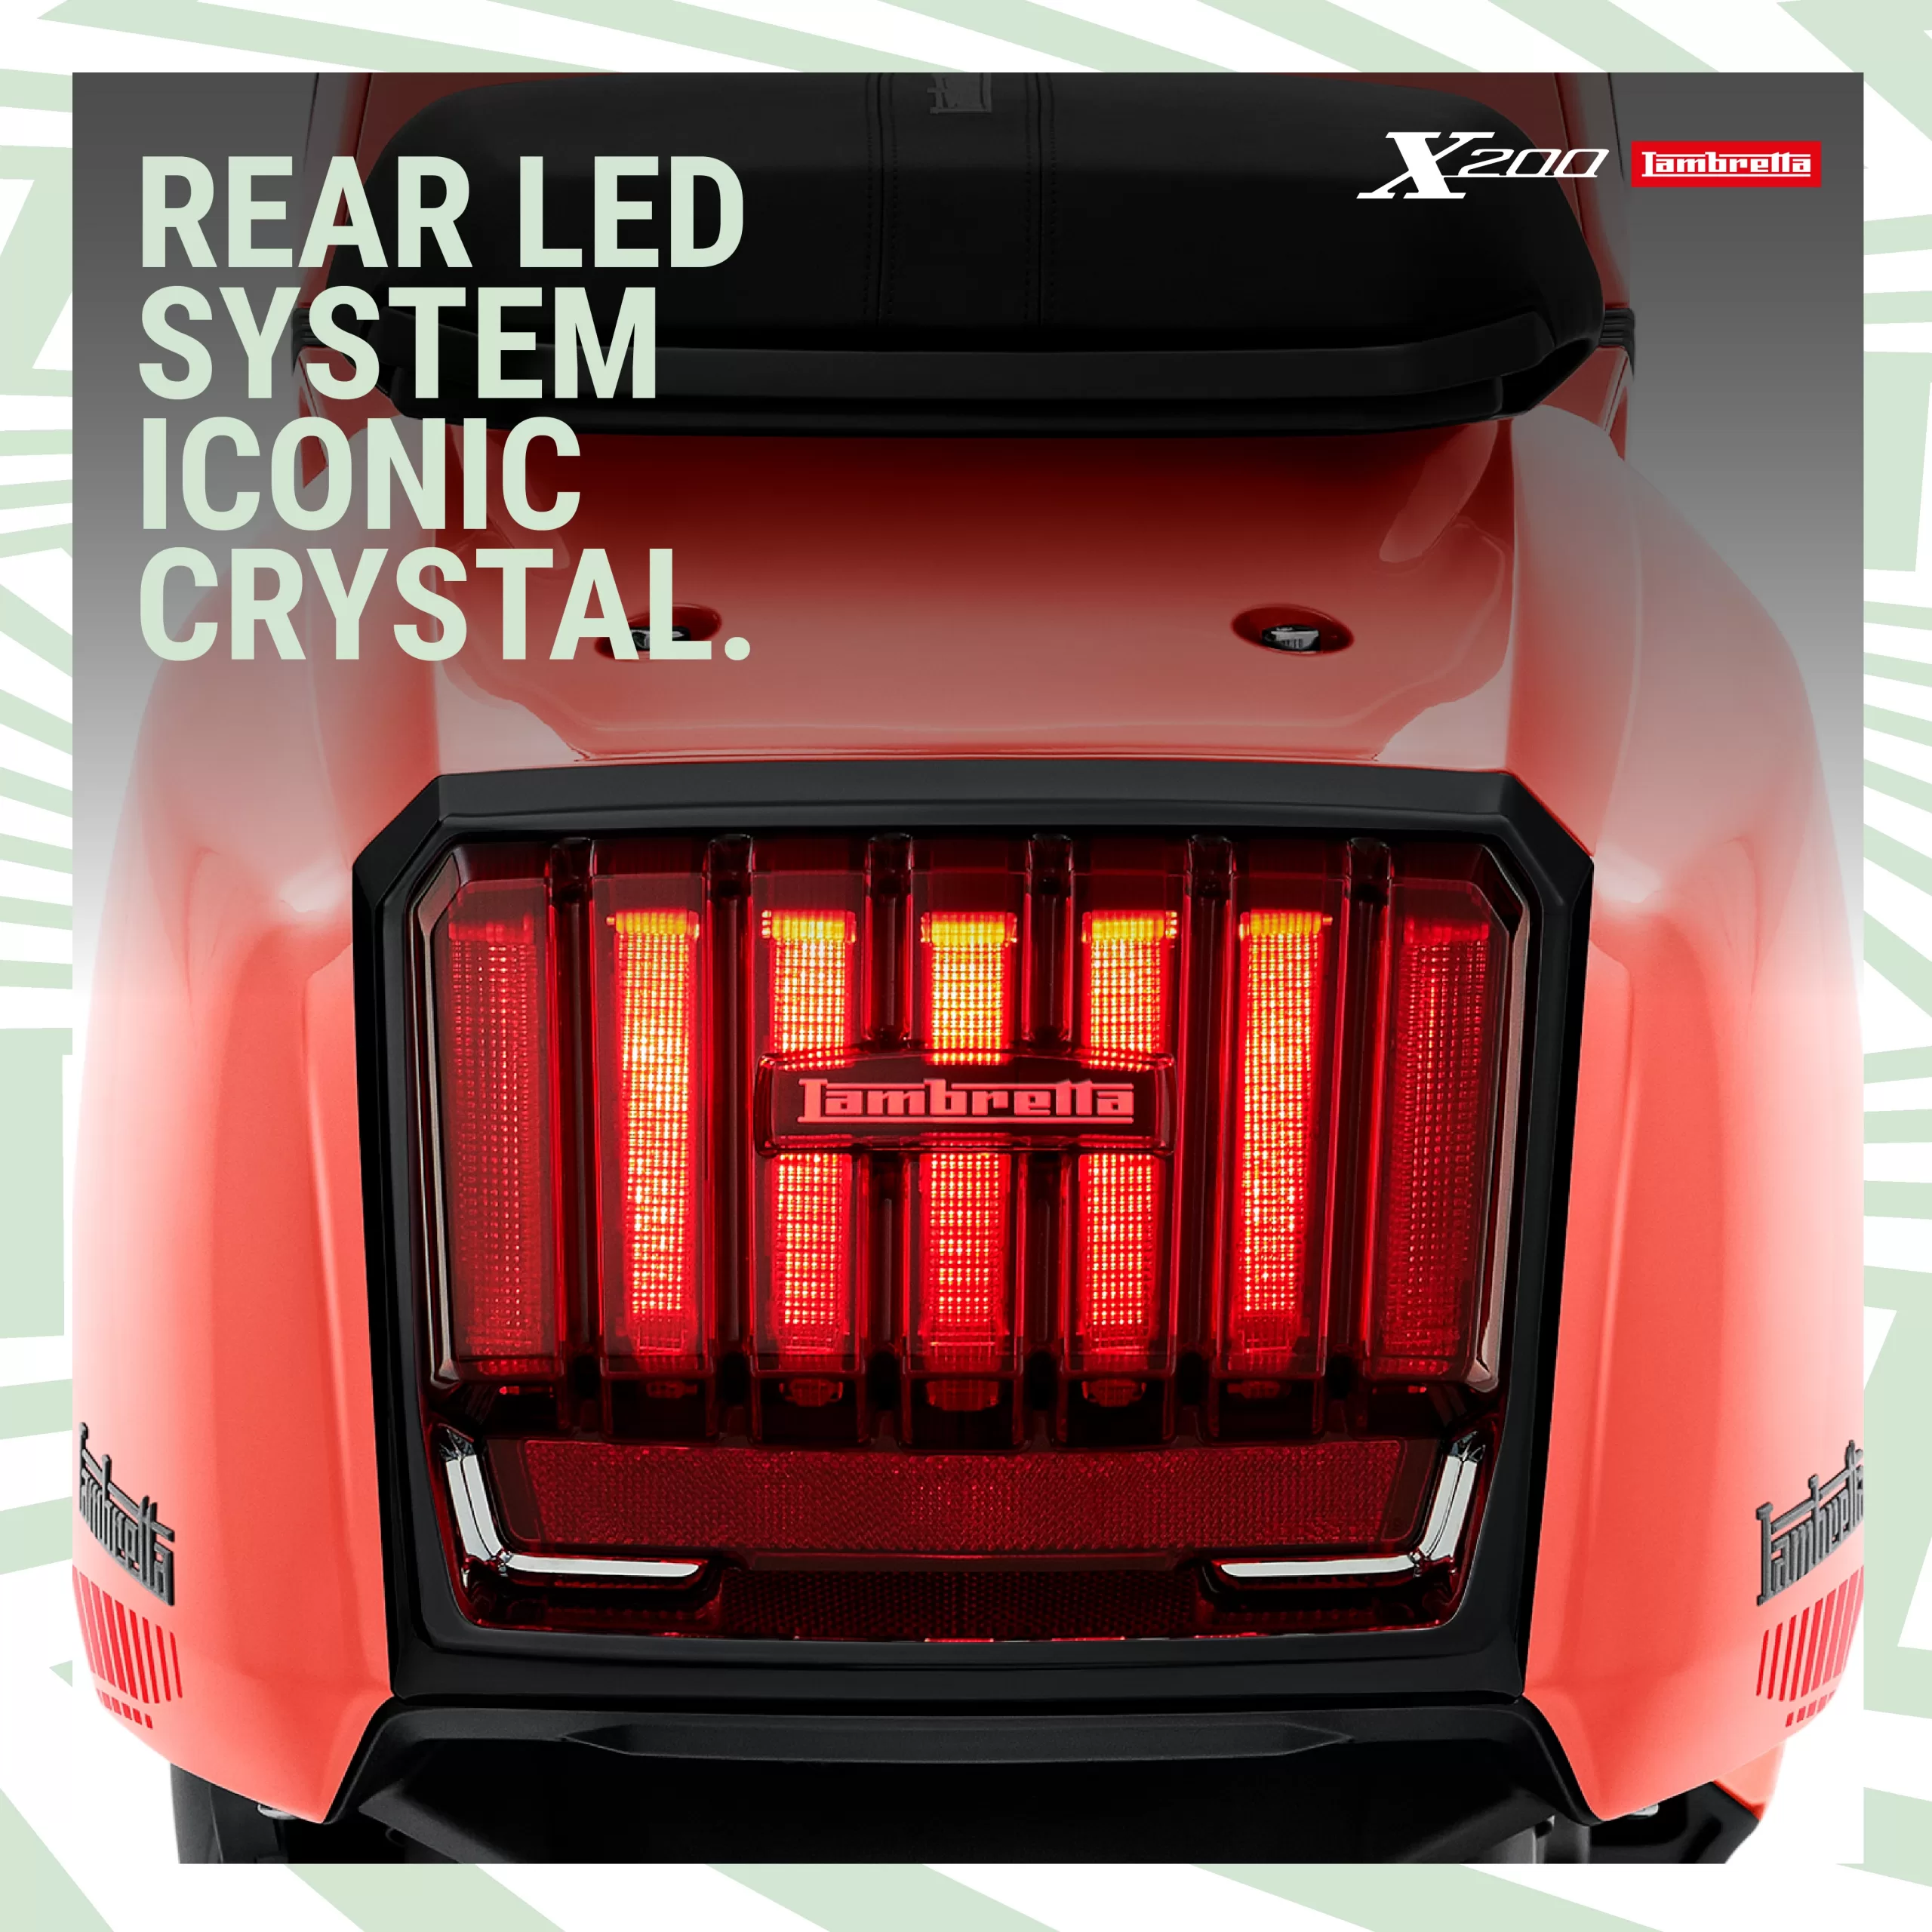 REAR LED SYSTEM ICONIC CRYSTAL